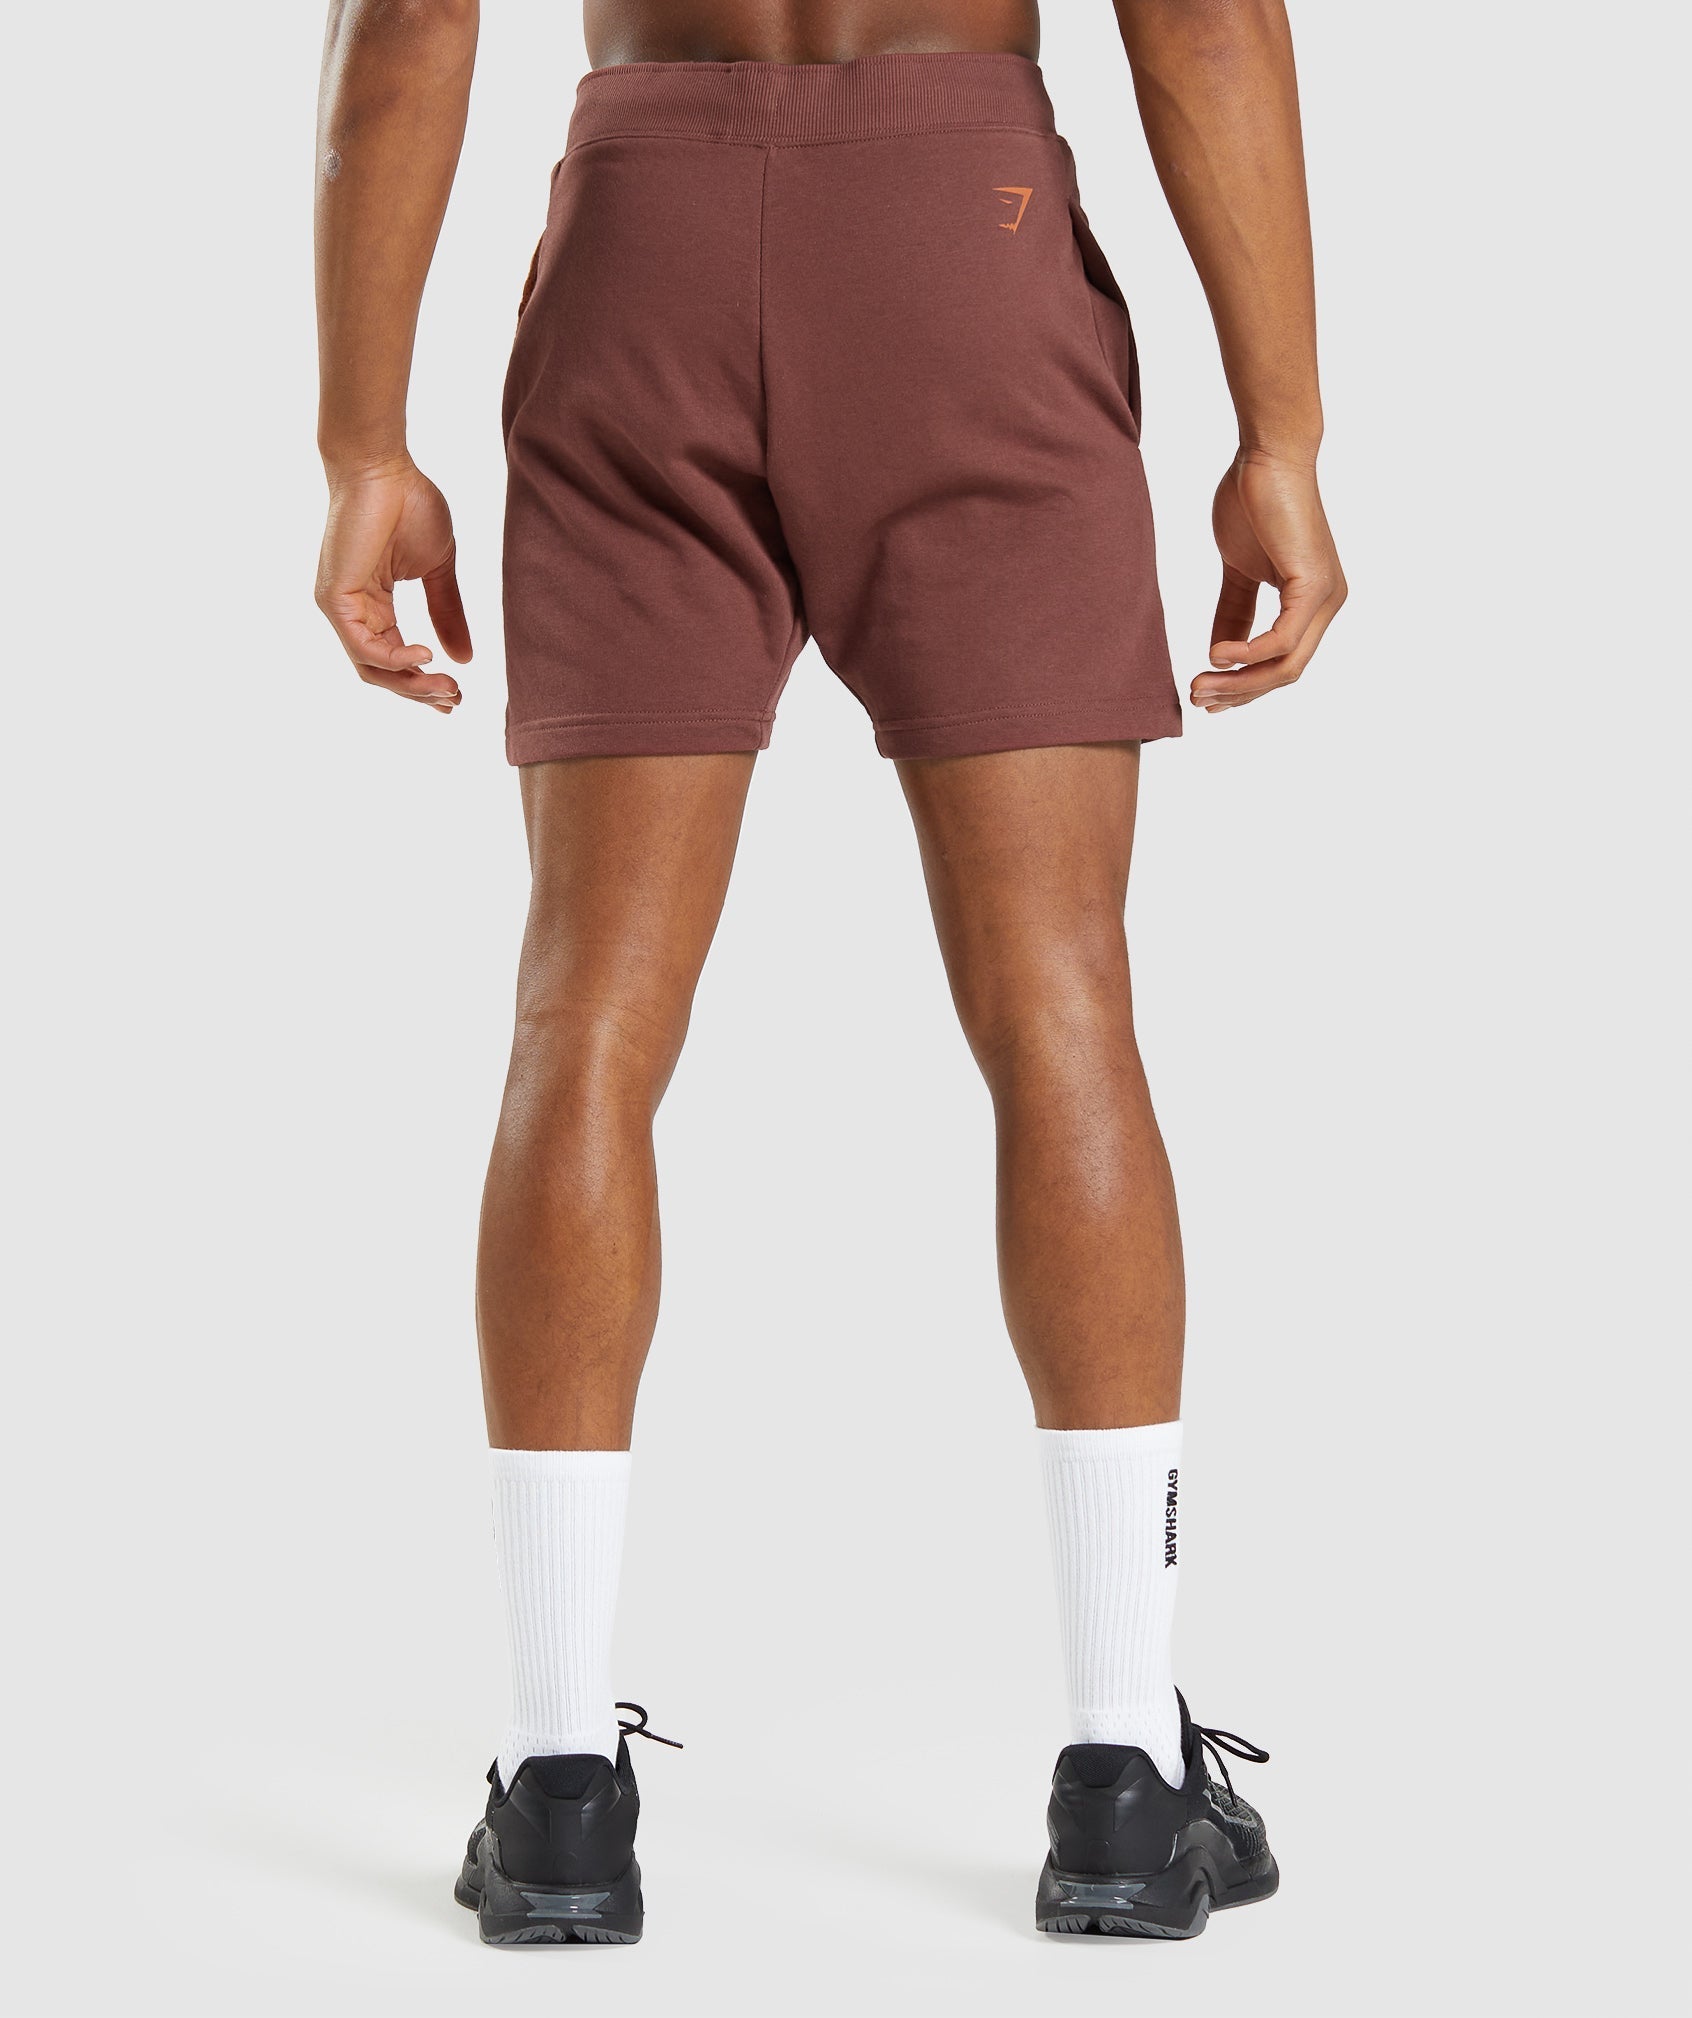 Gymshark Training Shorts - Cherry Brown